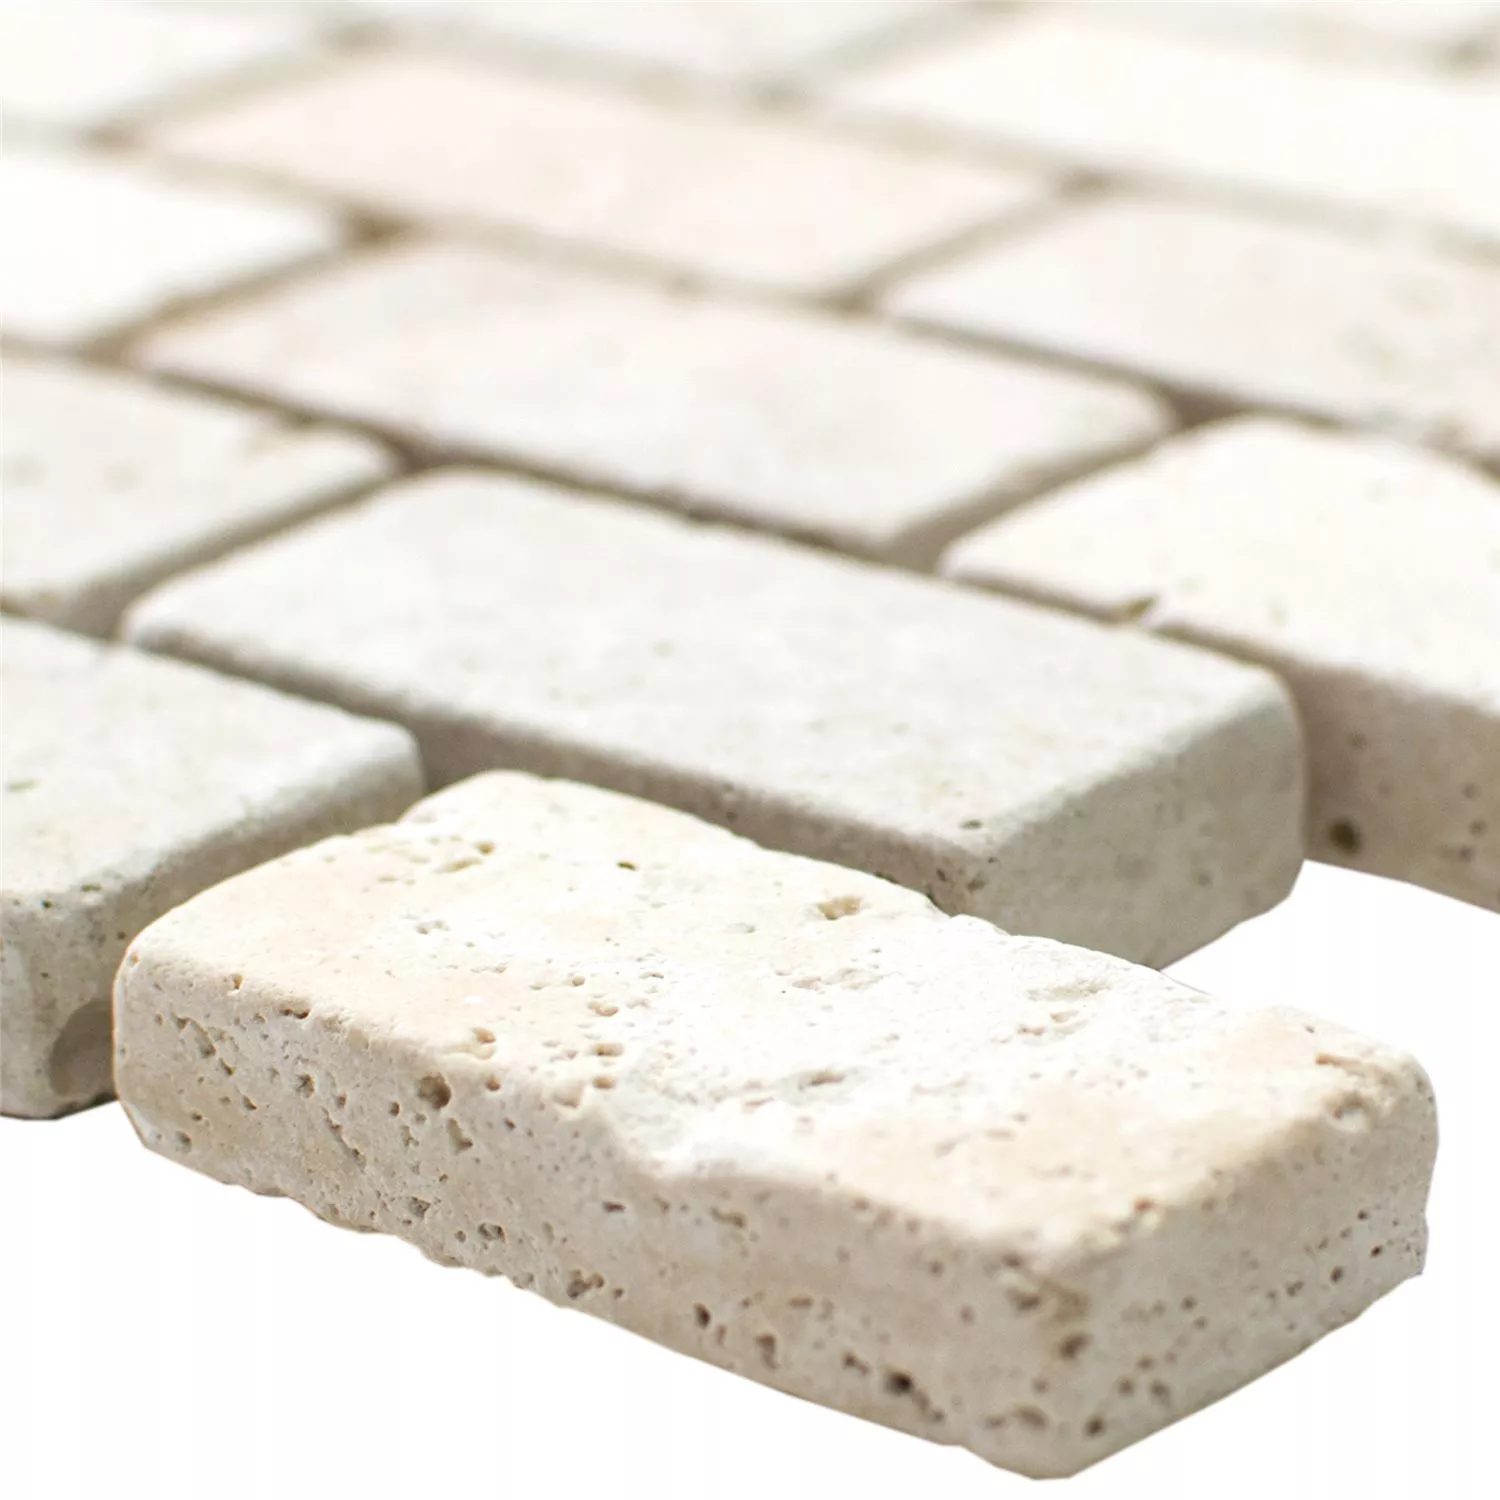 Sample Mosaic Tiles Travertine Barga Beige Brick